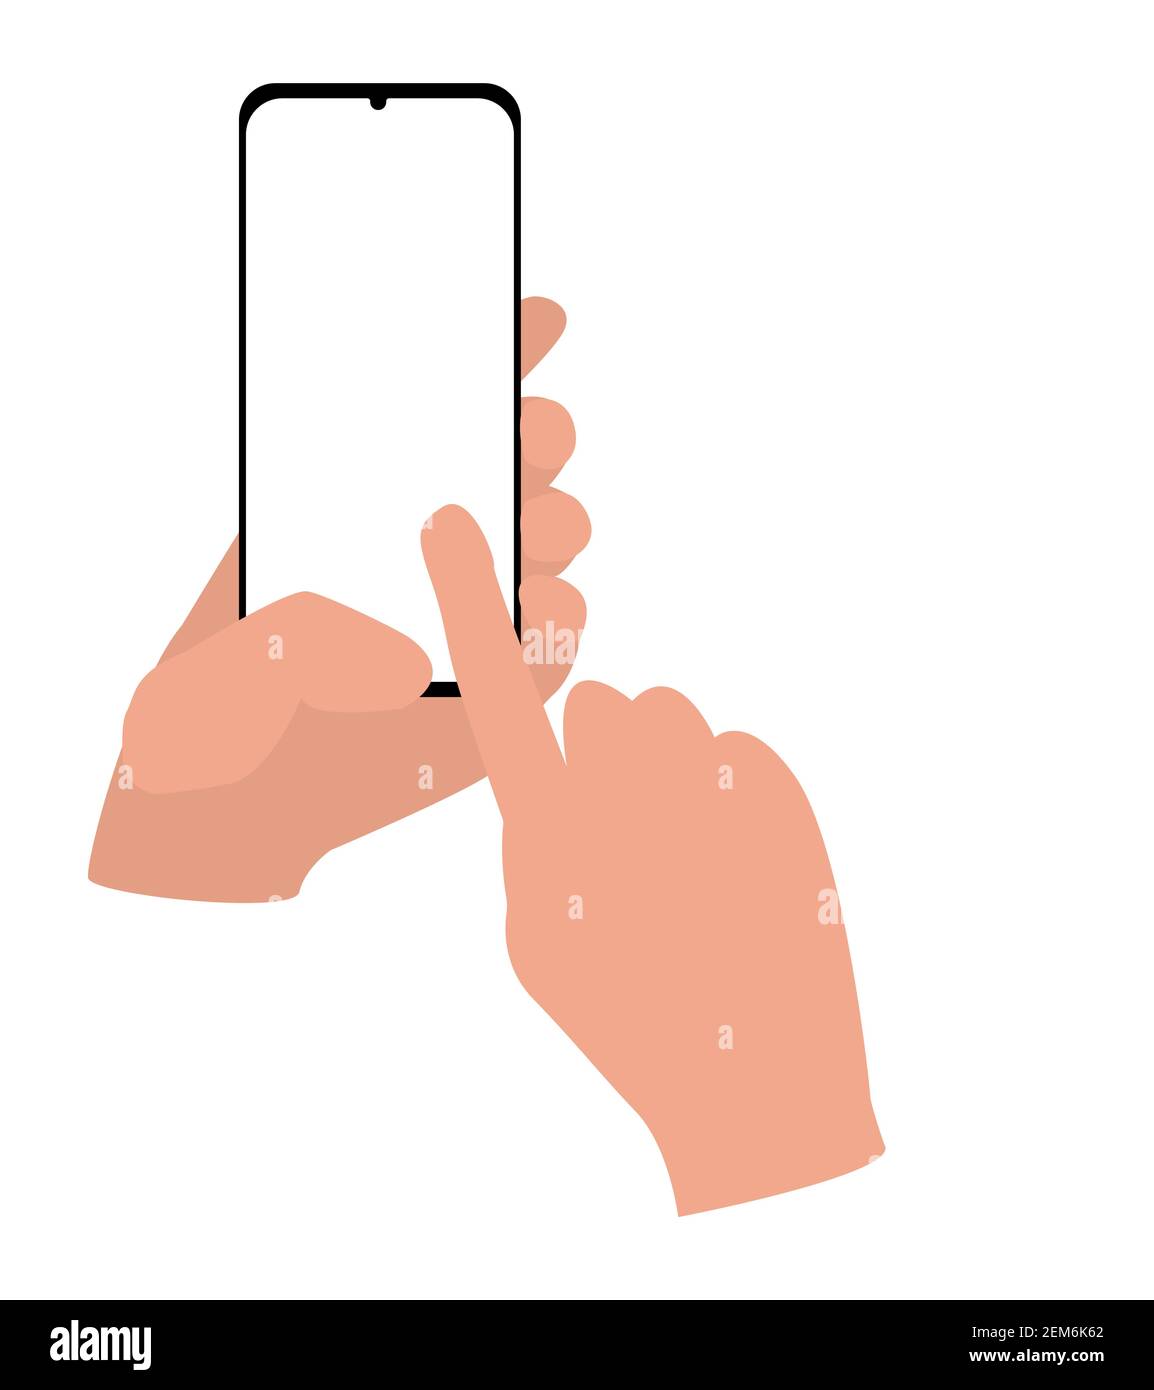 hand holds smartphone, finger presses on white blank screen mock up. isolated vector illustration Stock Vector